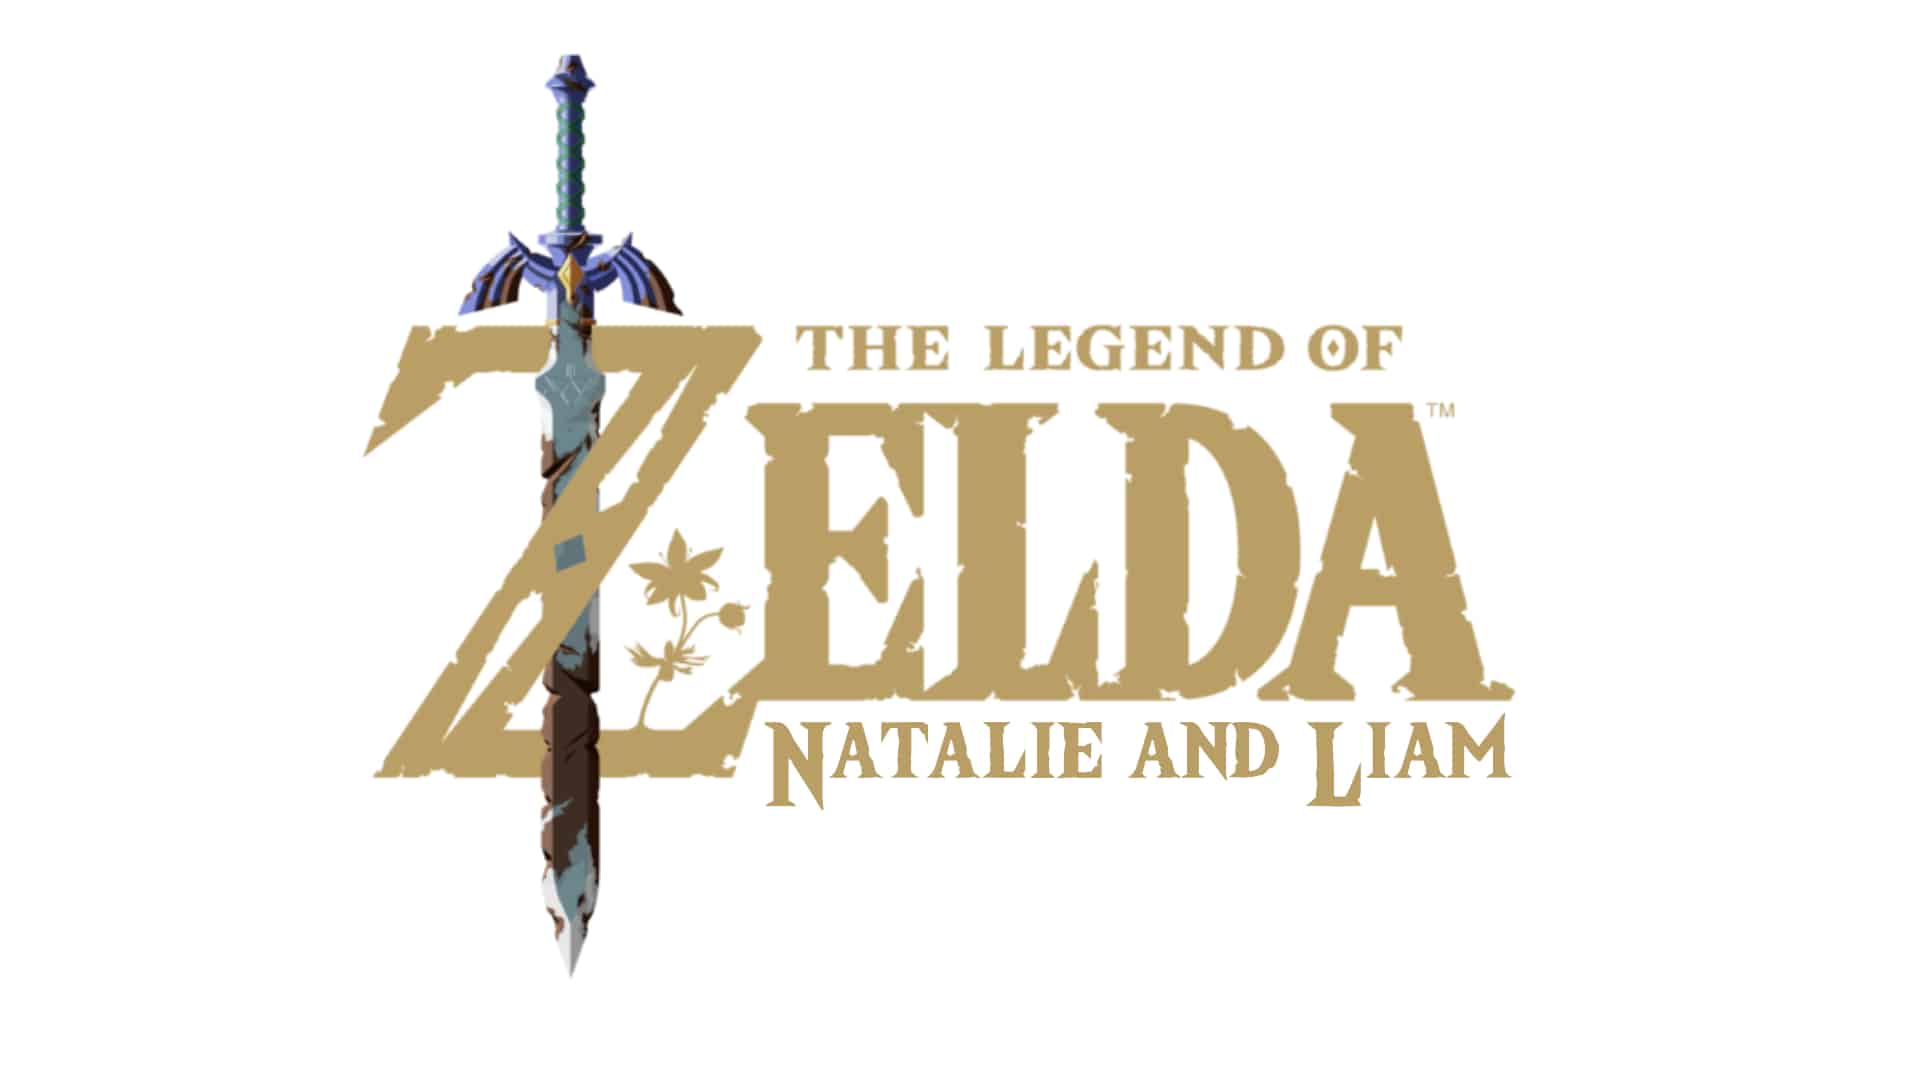 The Legend of Zelda a wedding film